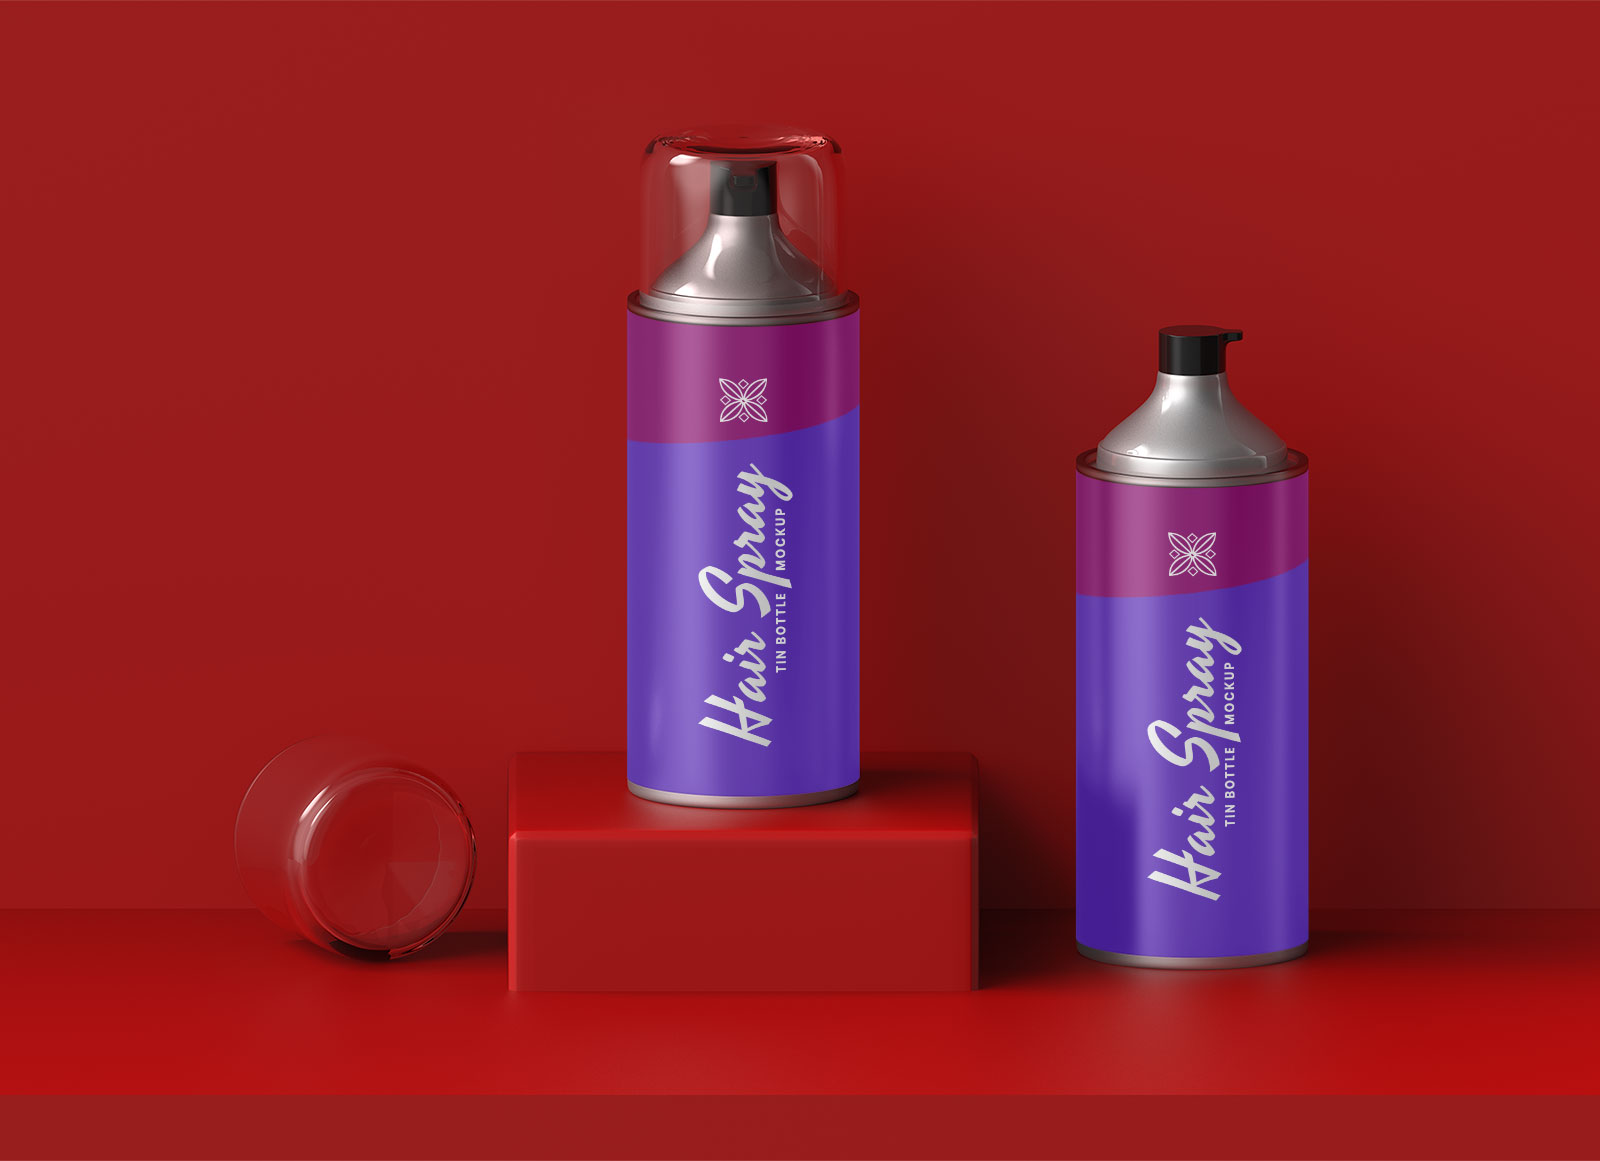 Free-Hair-Spray-Tin-Bottle-Mockup-PSD